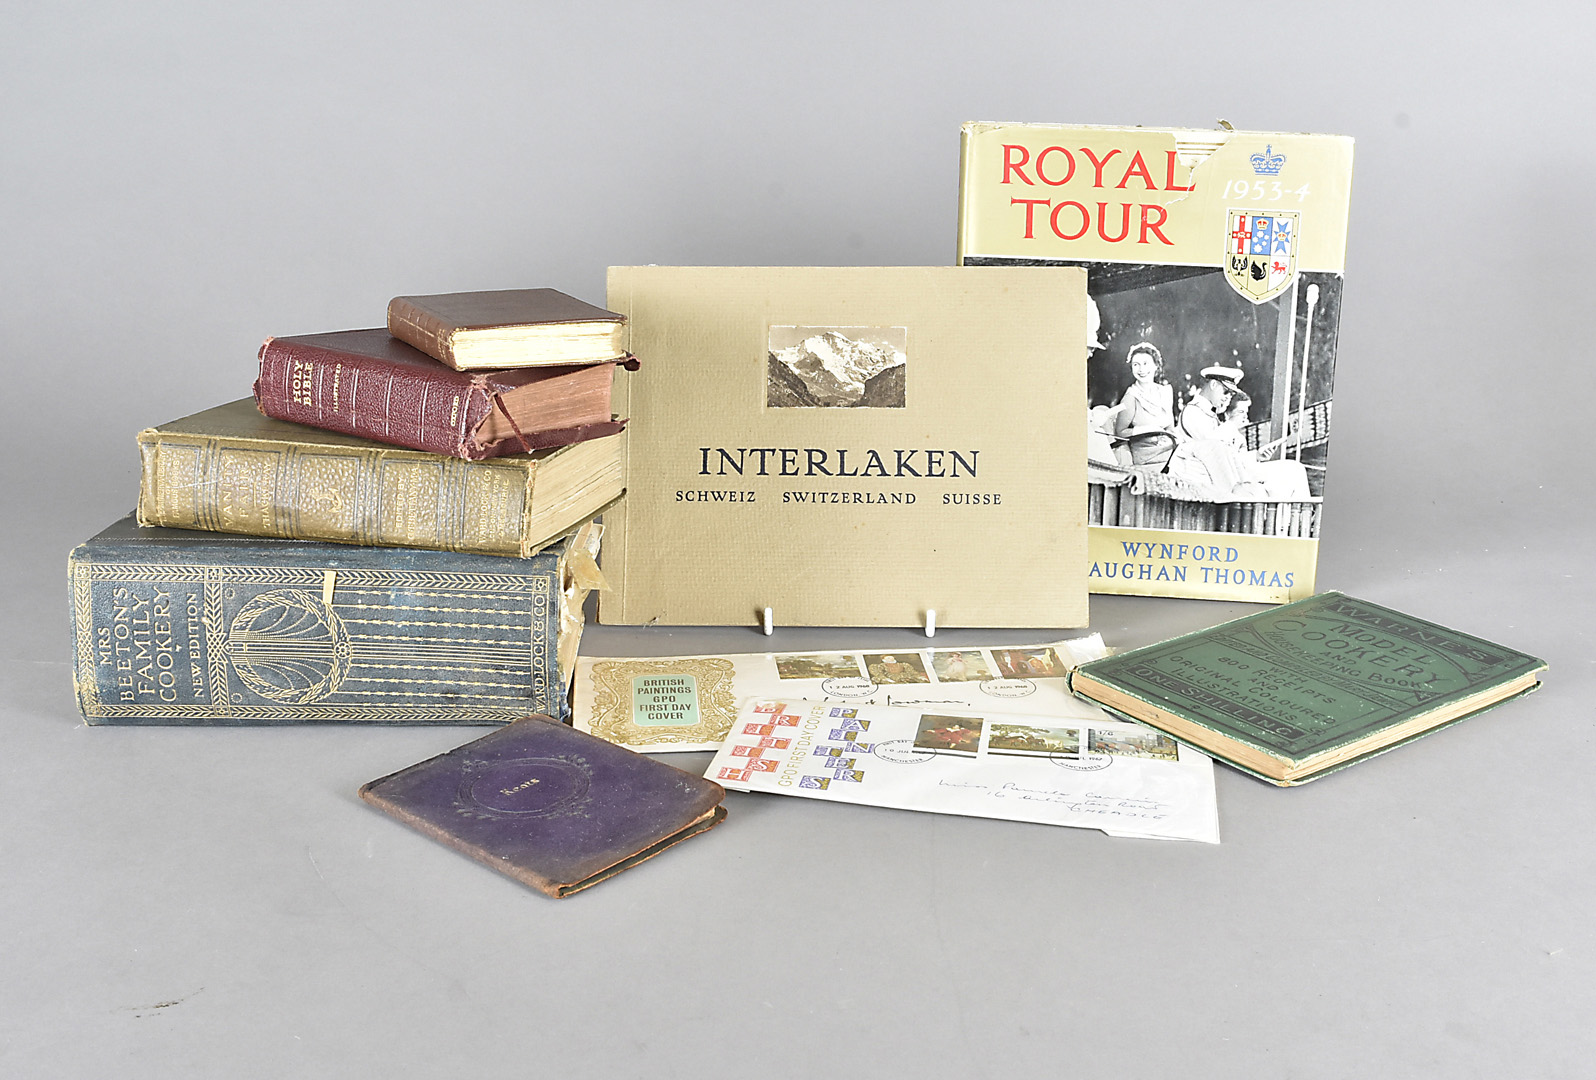 A collection of miscellaneous books, Royal Commemorative, souvenir albums etc including